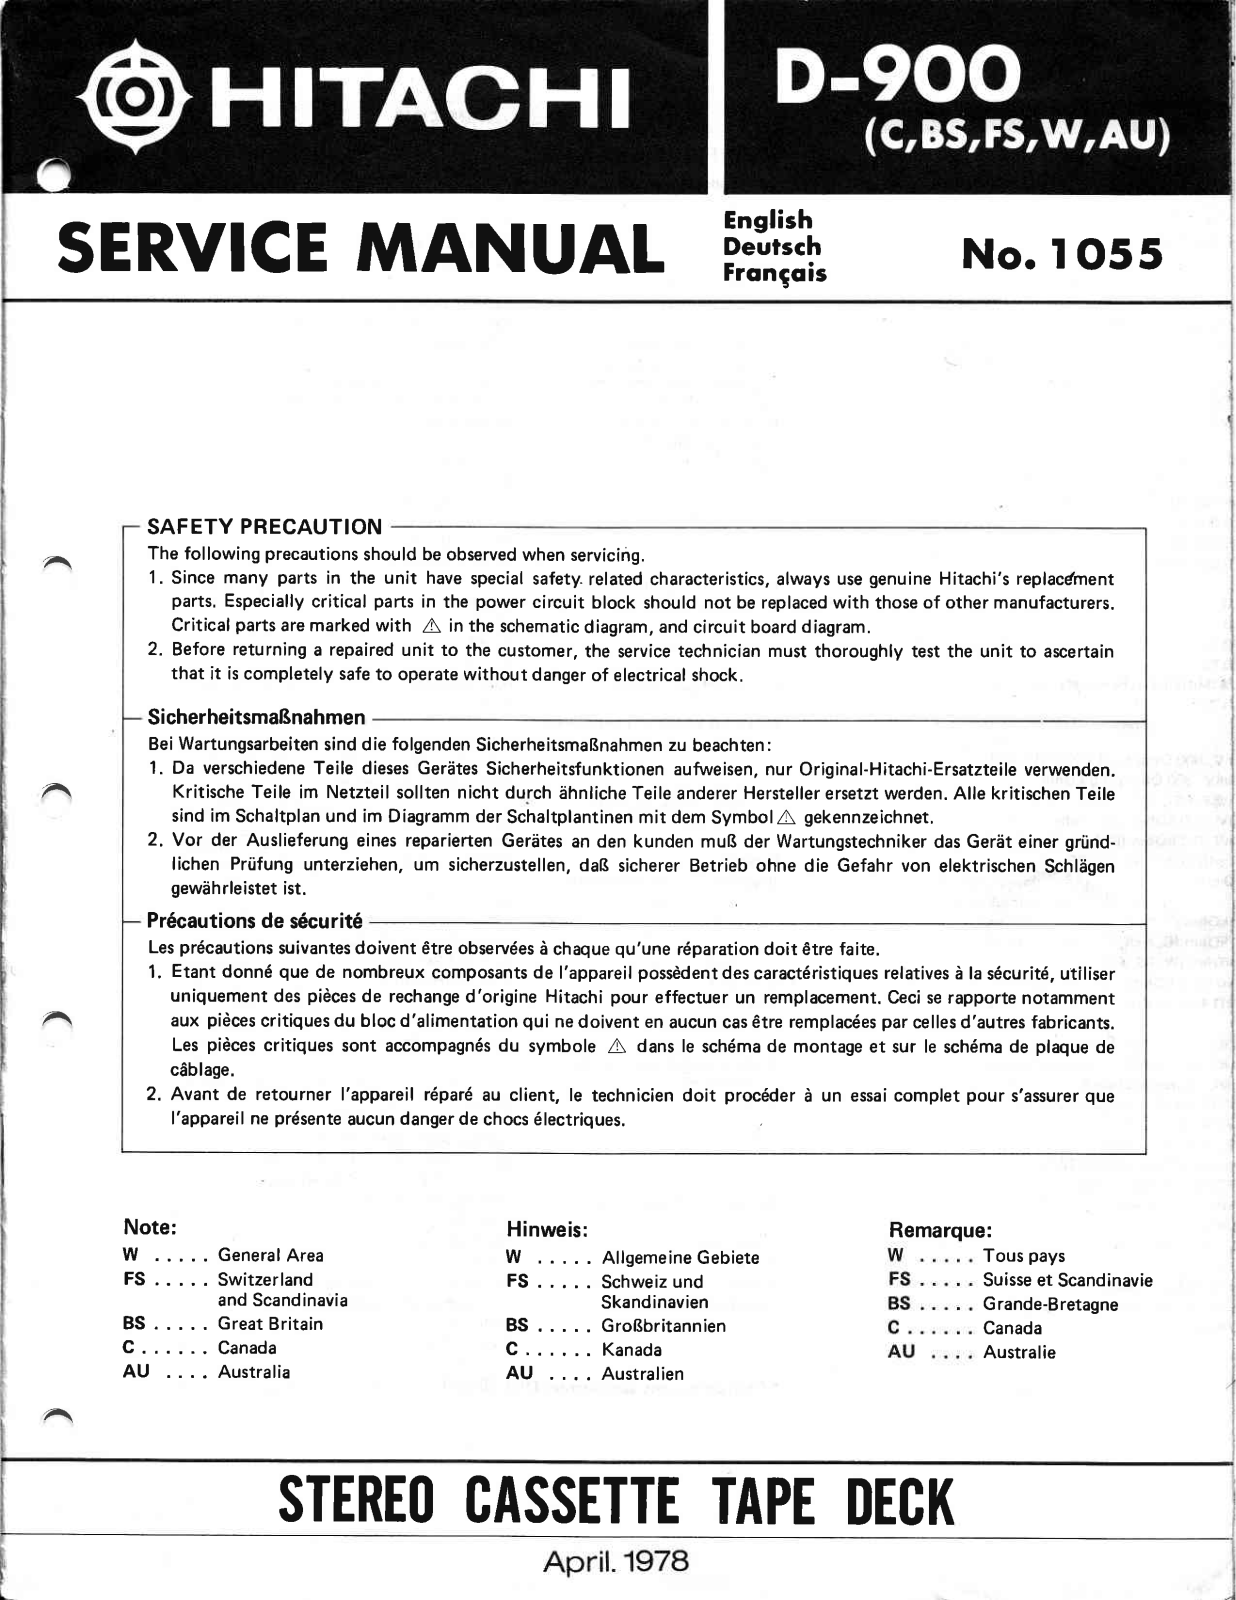 Hitachi D-900 Service Manual